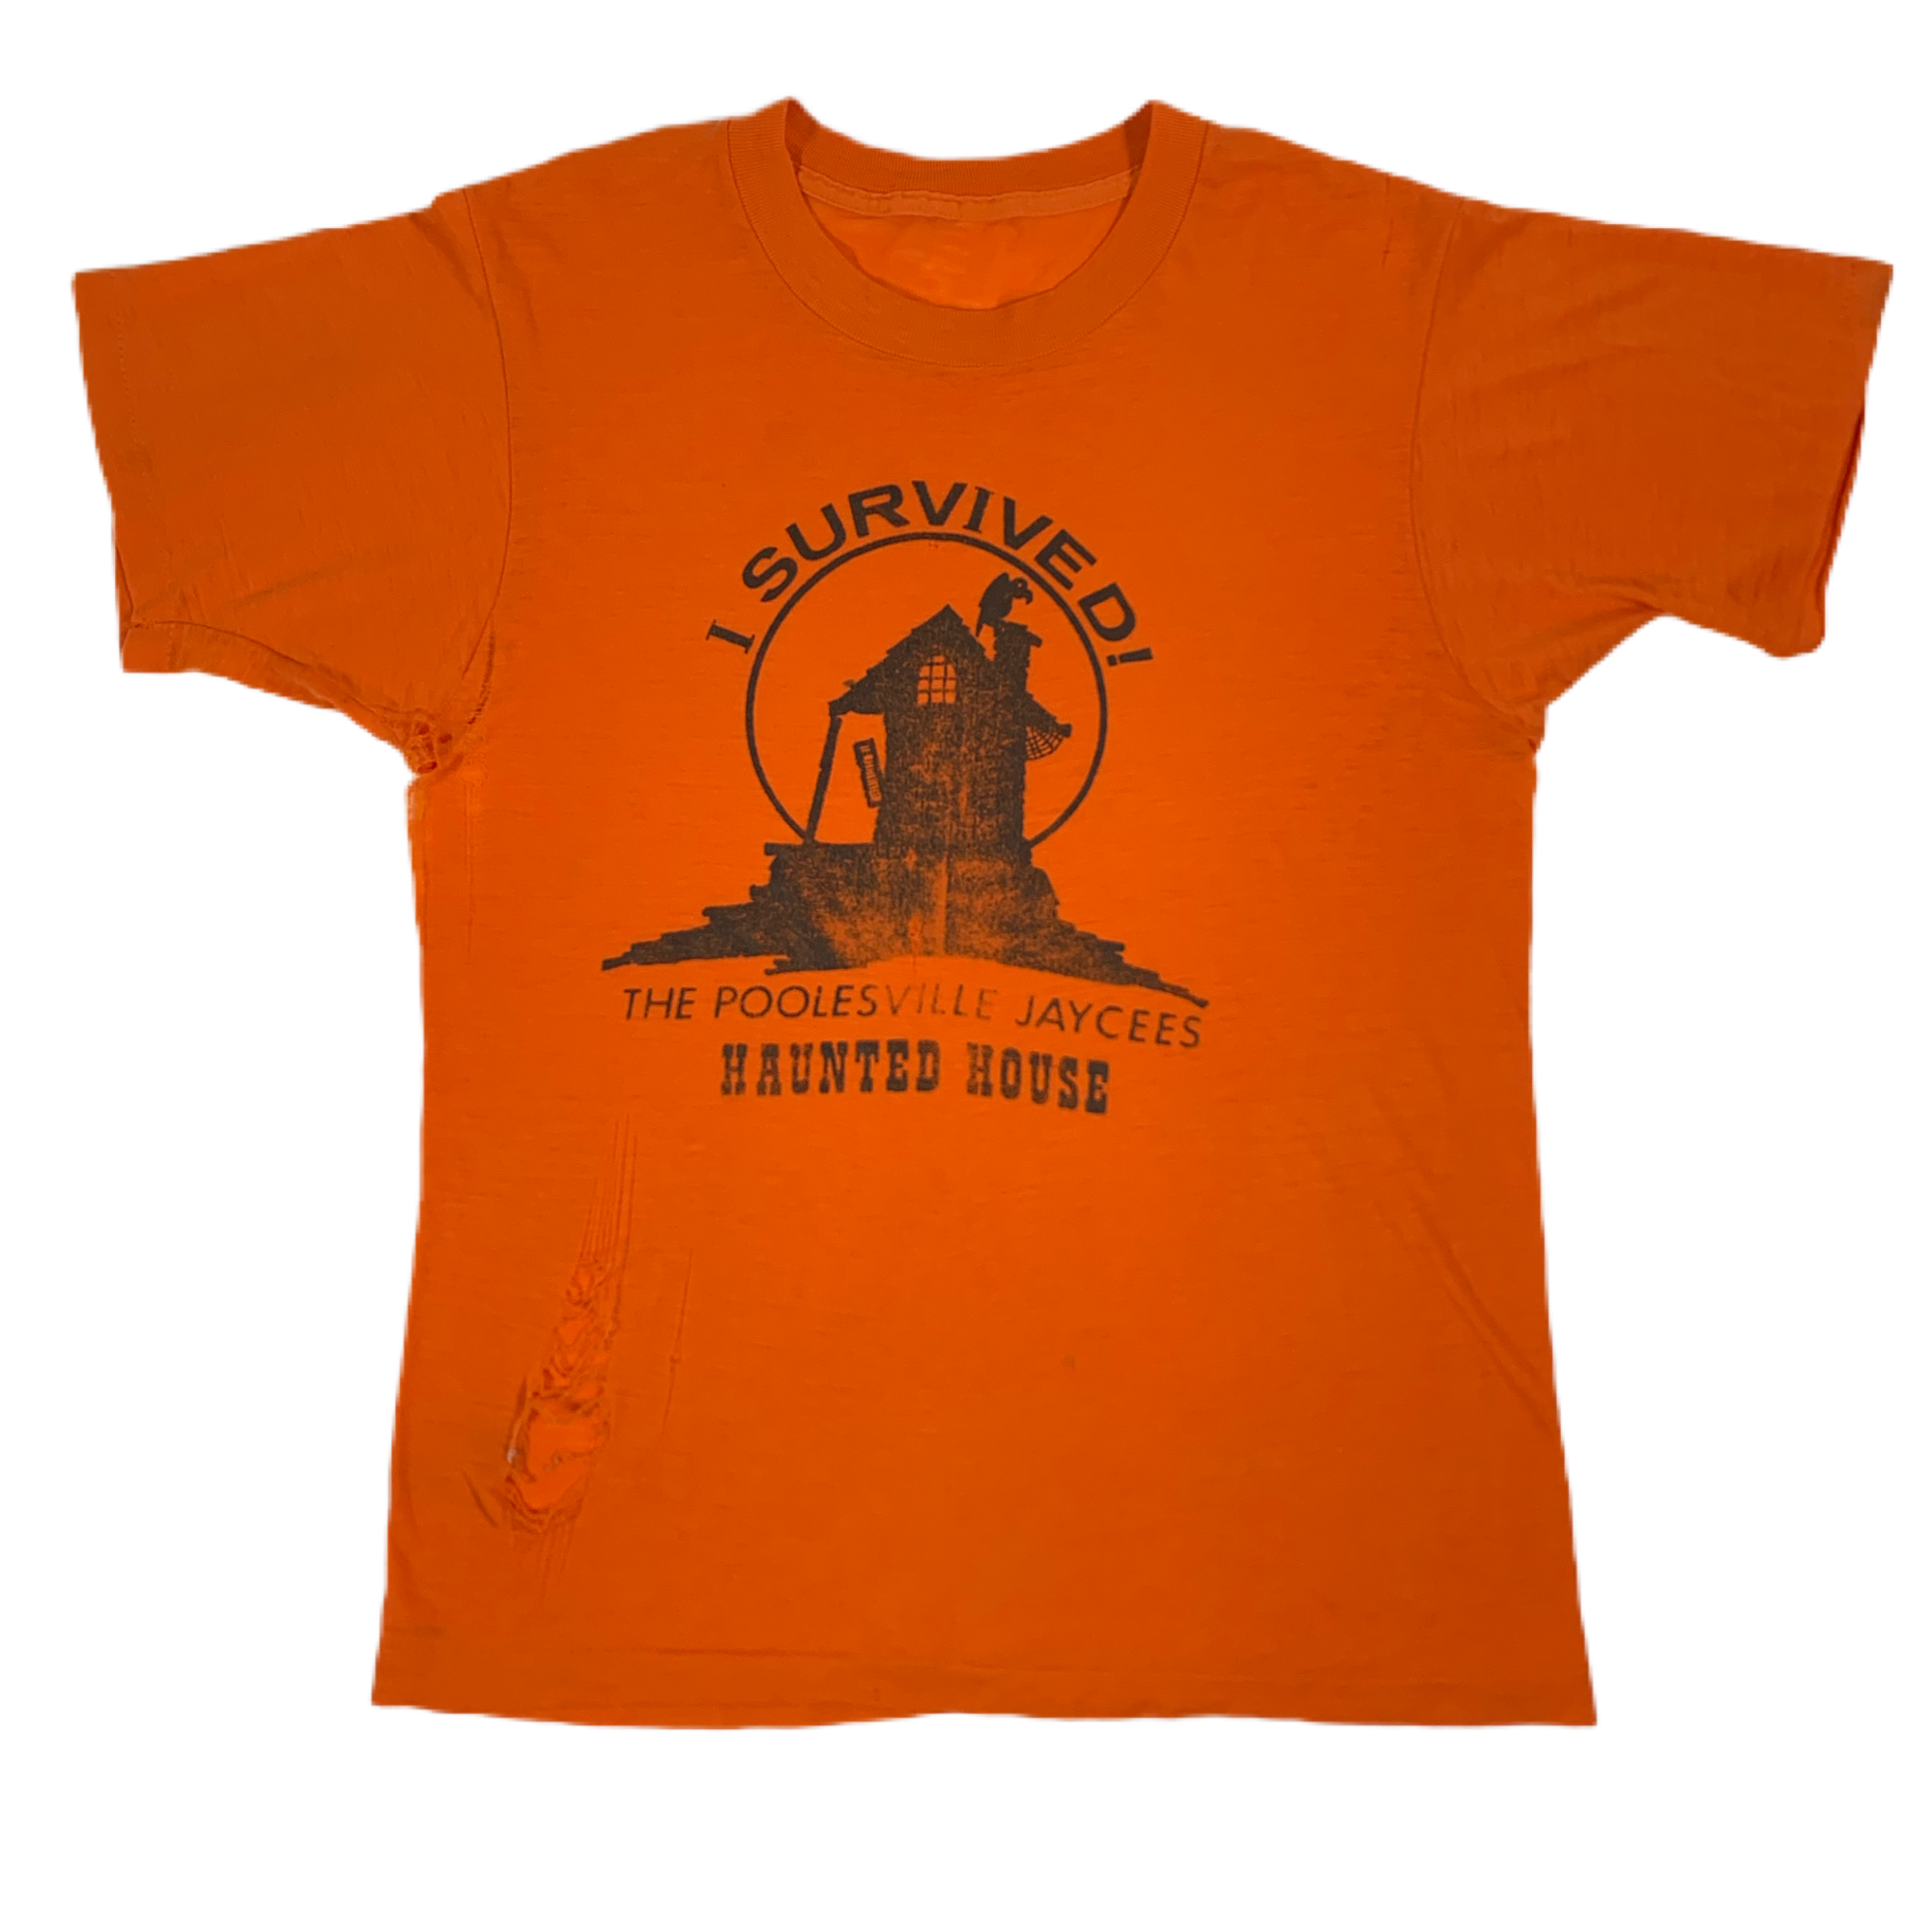 Vintage Poolesville Jaycees “Haunted House” T-Shirt - jointcustodydc